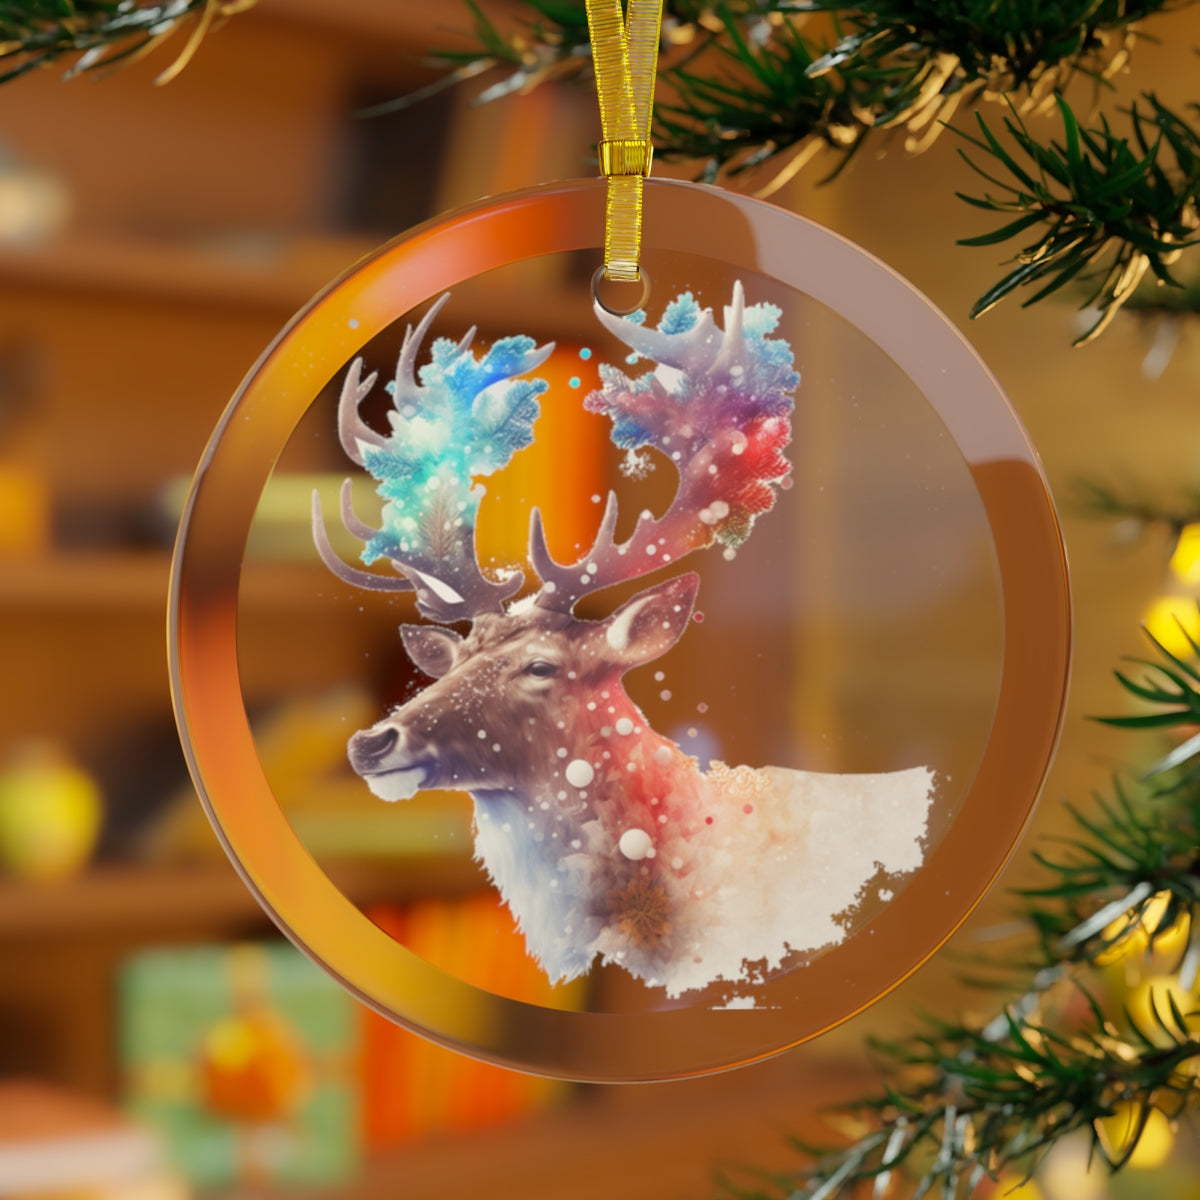 Neduz Designs Exposed Christmas Holidays Reindeer Glass Ornament